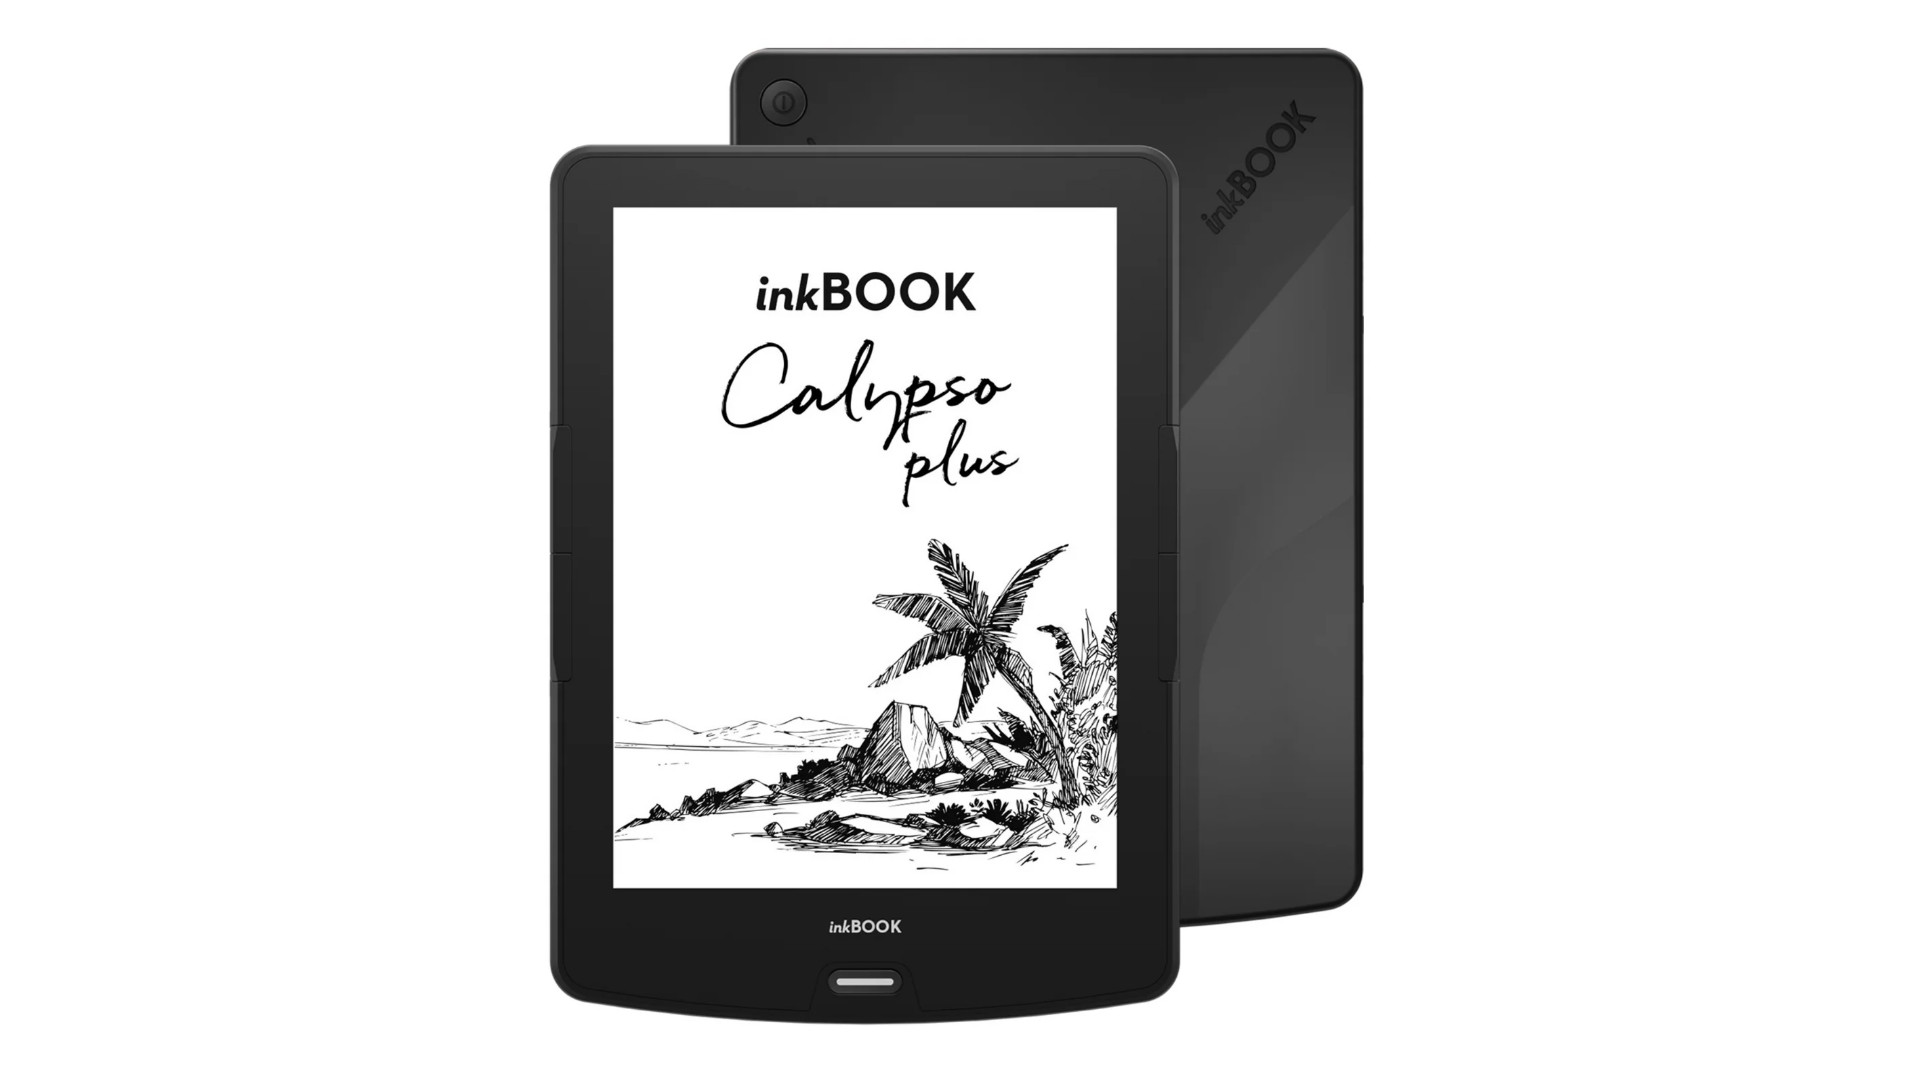 inkbook calypso plus